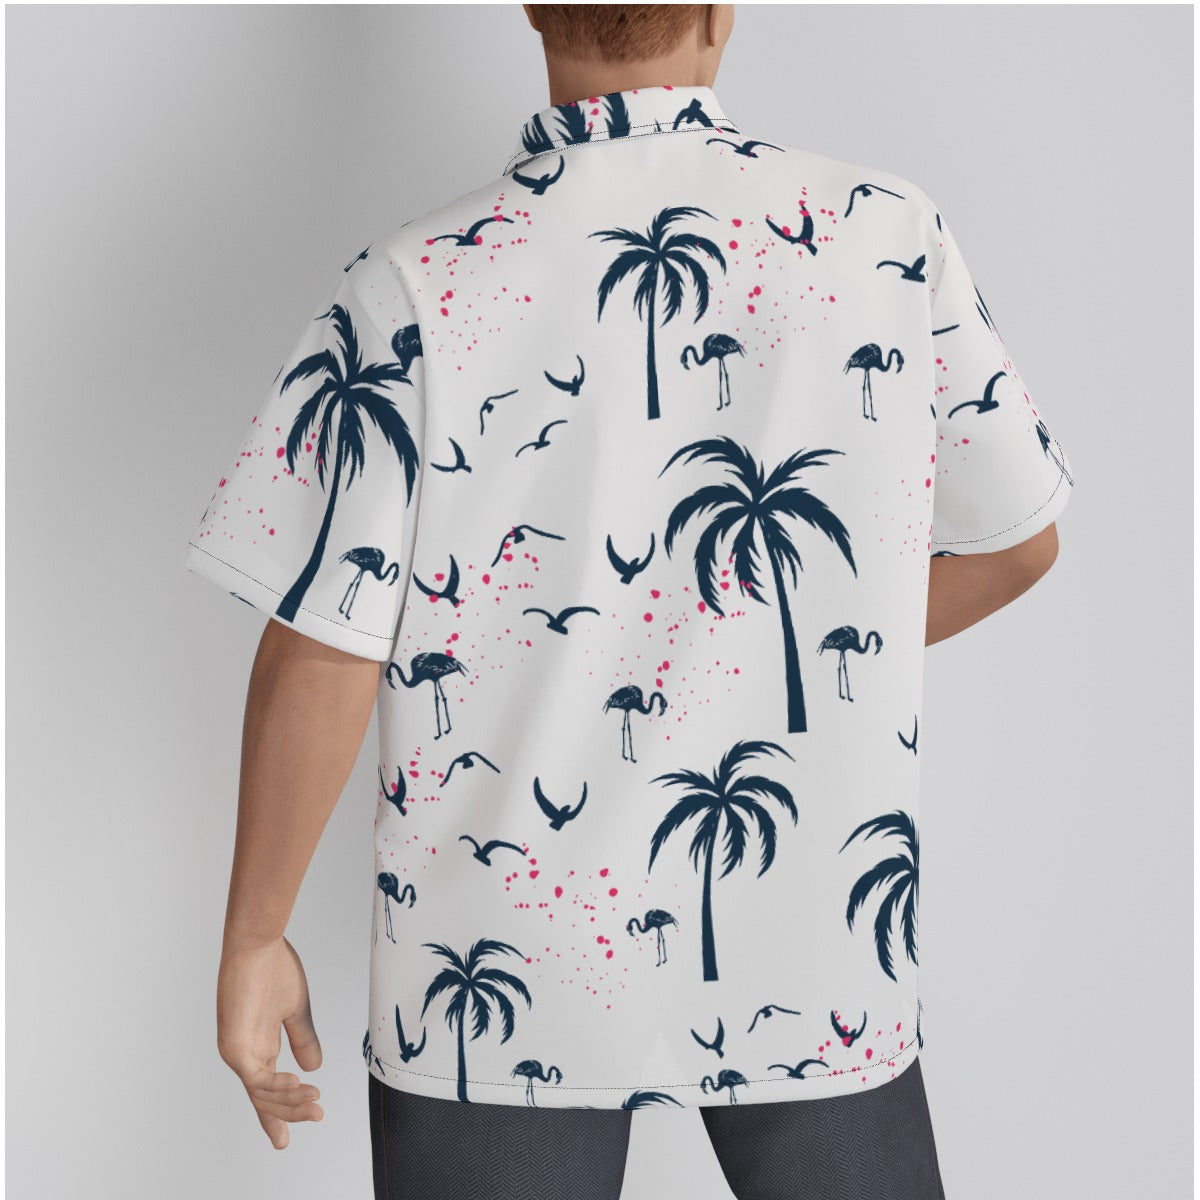 SEANGANJE Men's Hawaiian Shirt With Button Closure